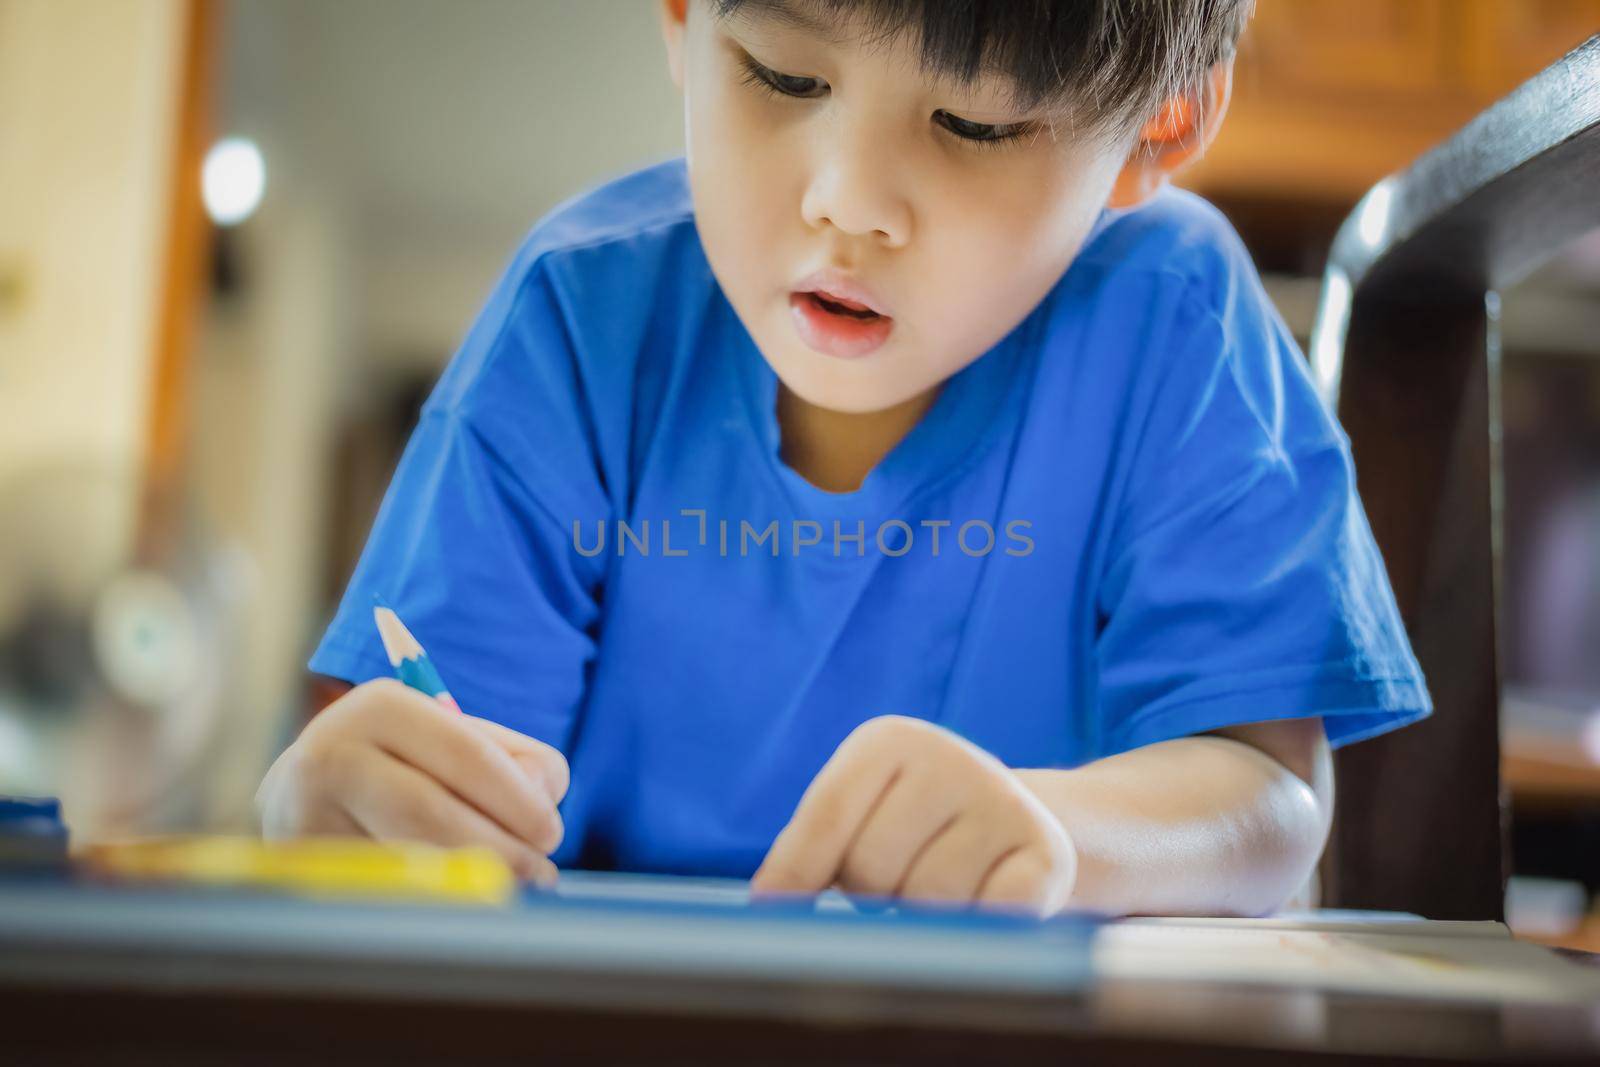 kindergarten children coloring their homework to the teacher. by Manastrong